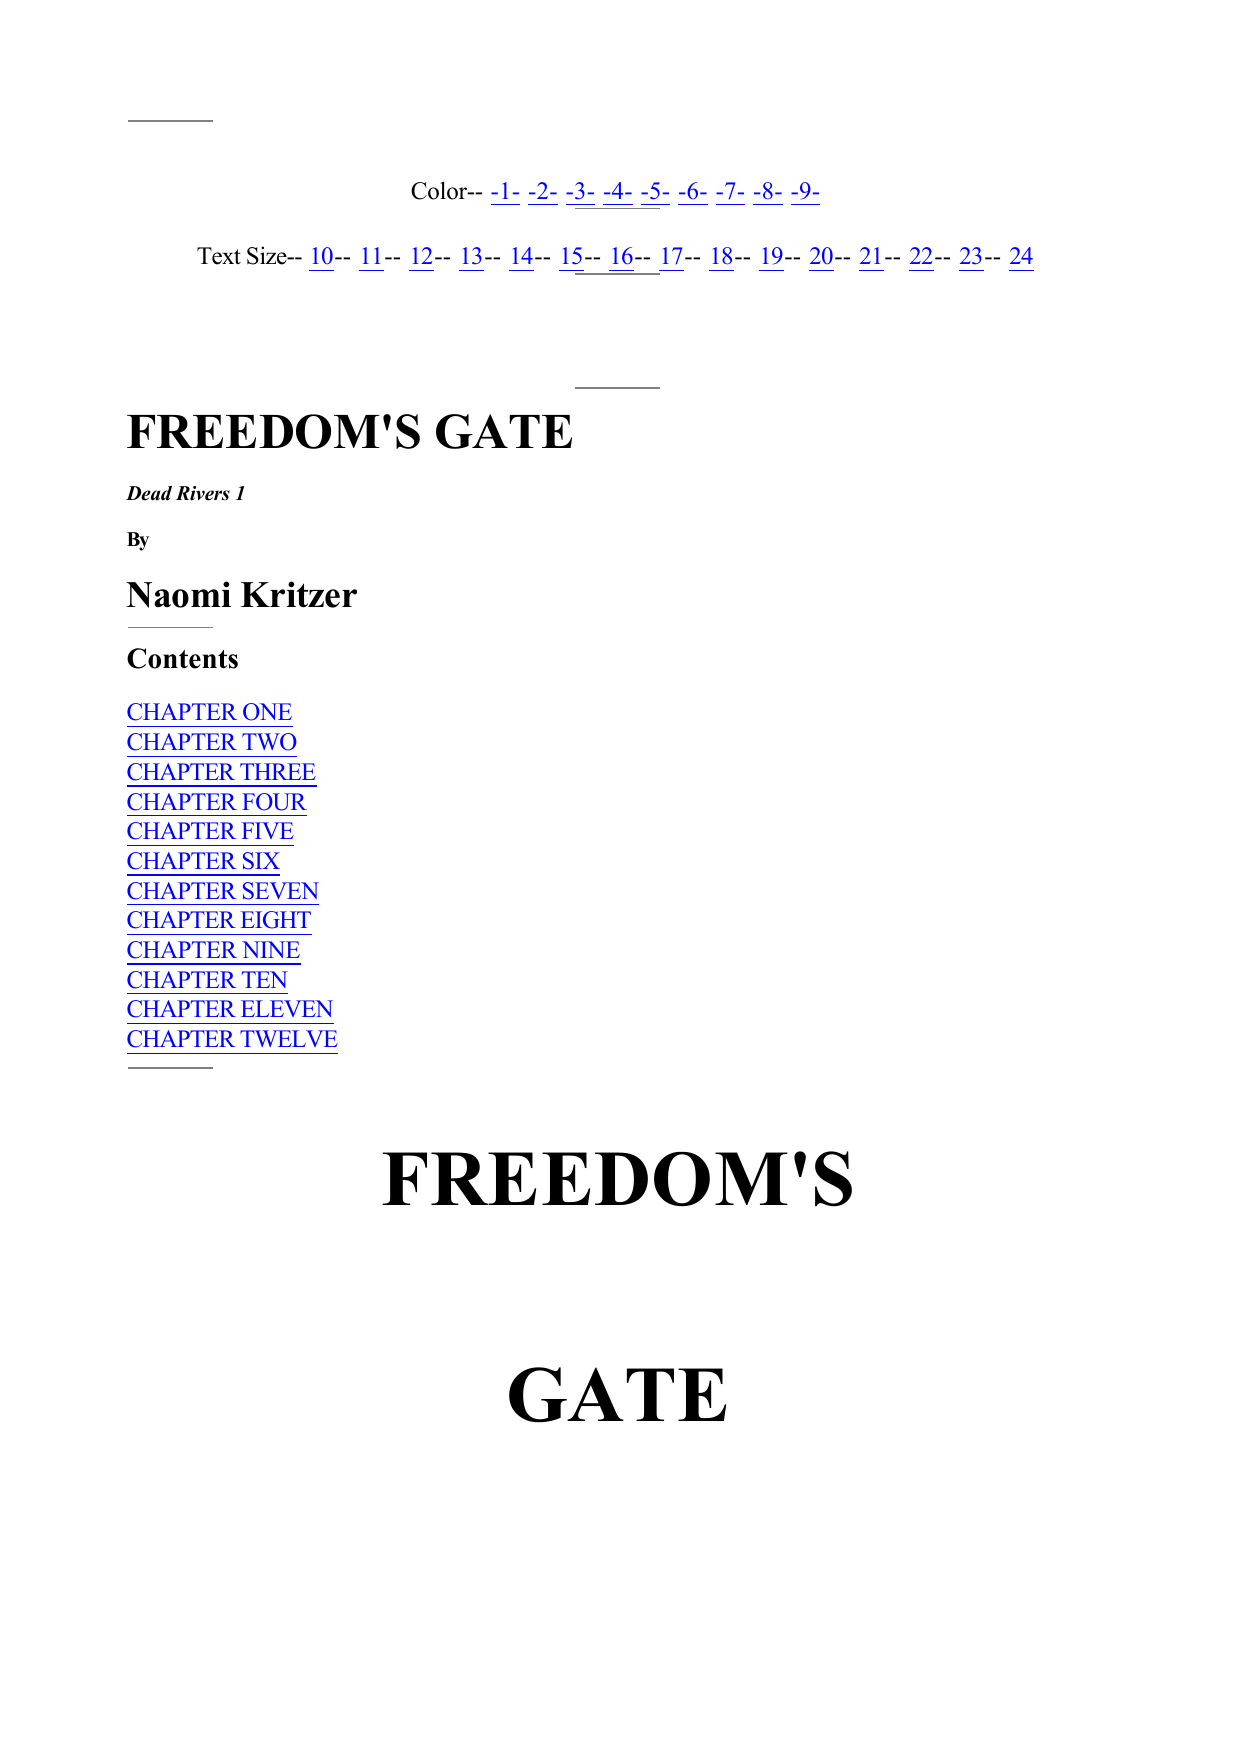 Freedom's Gate